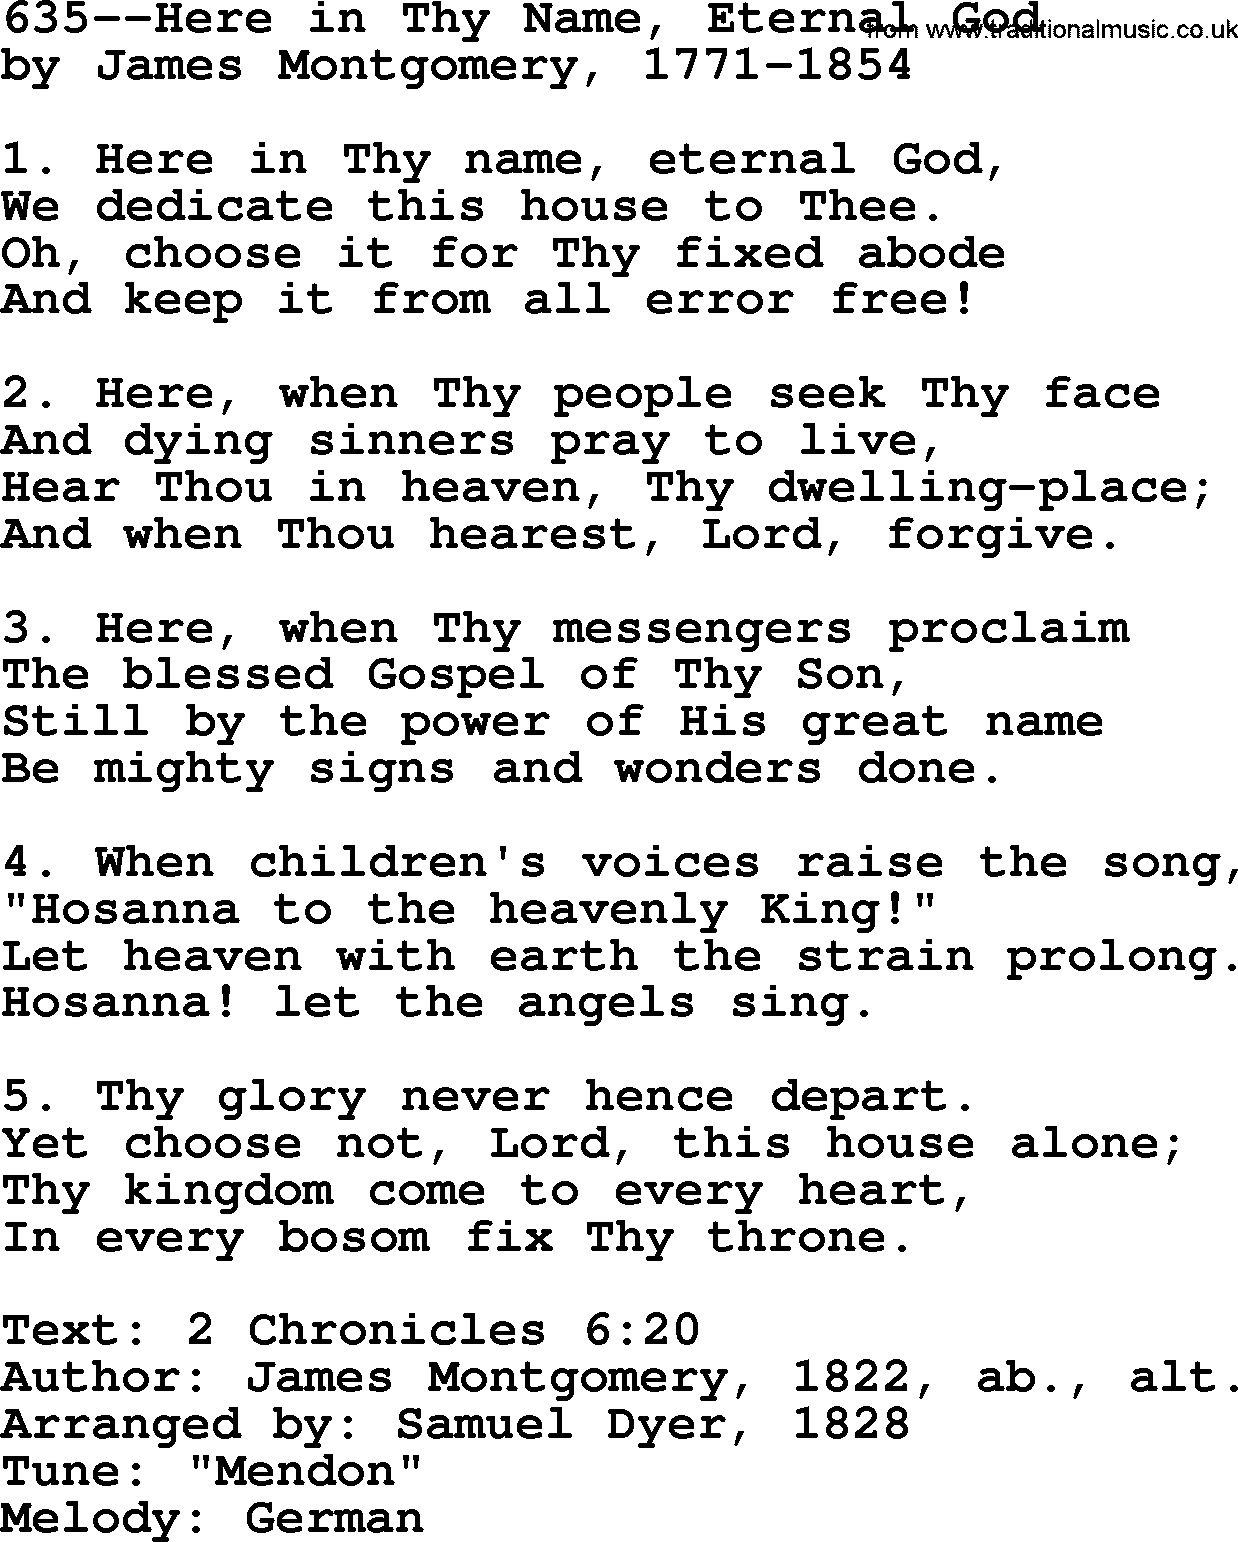 Lutheran Hymn: 635--Here in Thy Name, Eternal God.txt lyrics with PDF